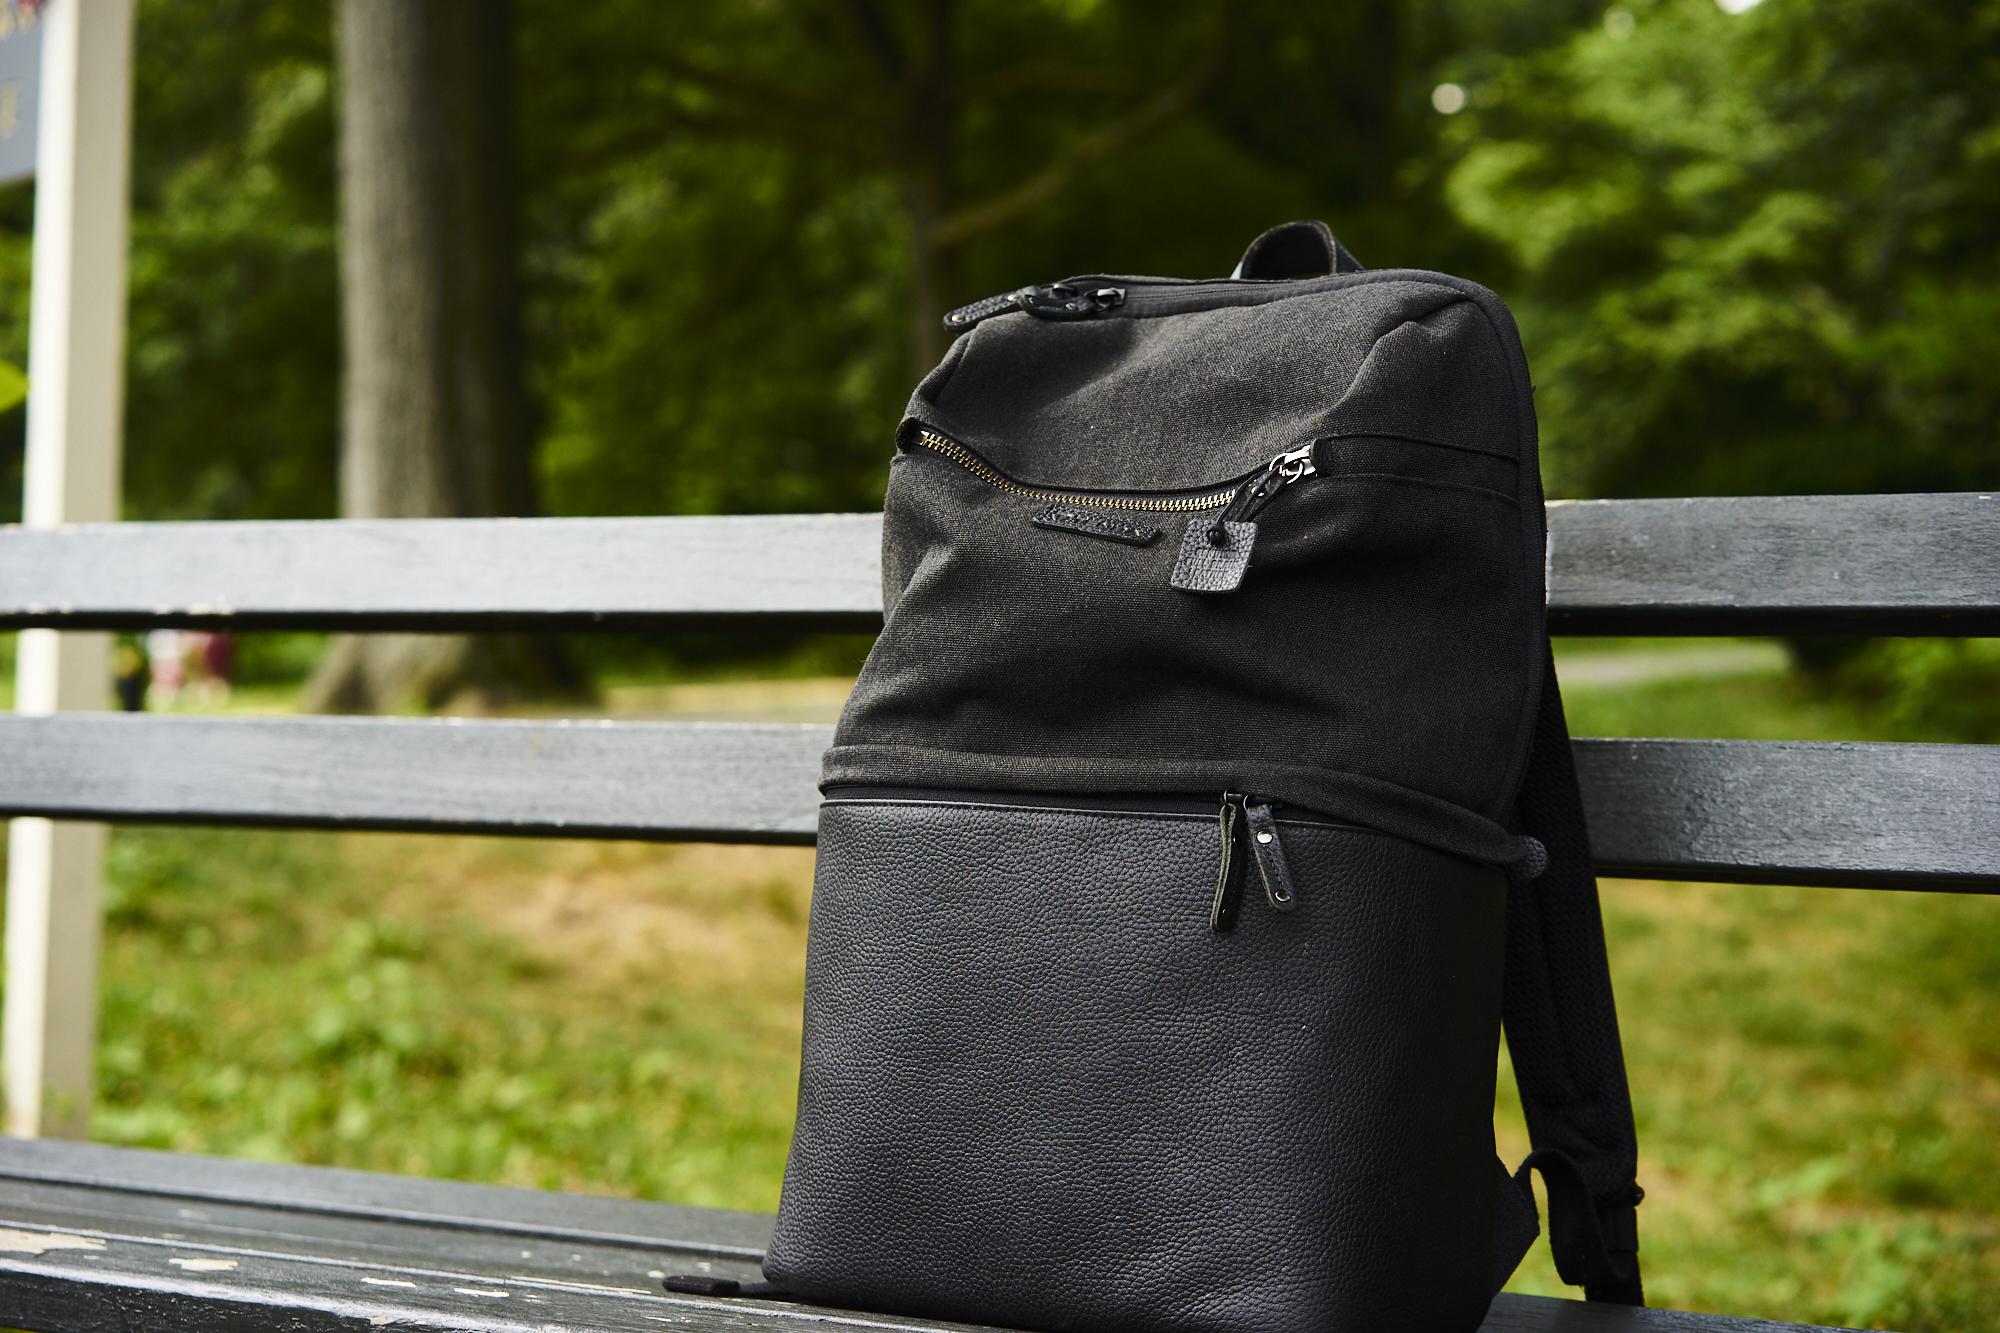 Camera Bag Review: Tenba Cooper DSLR Backpack (For the City Dweller)